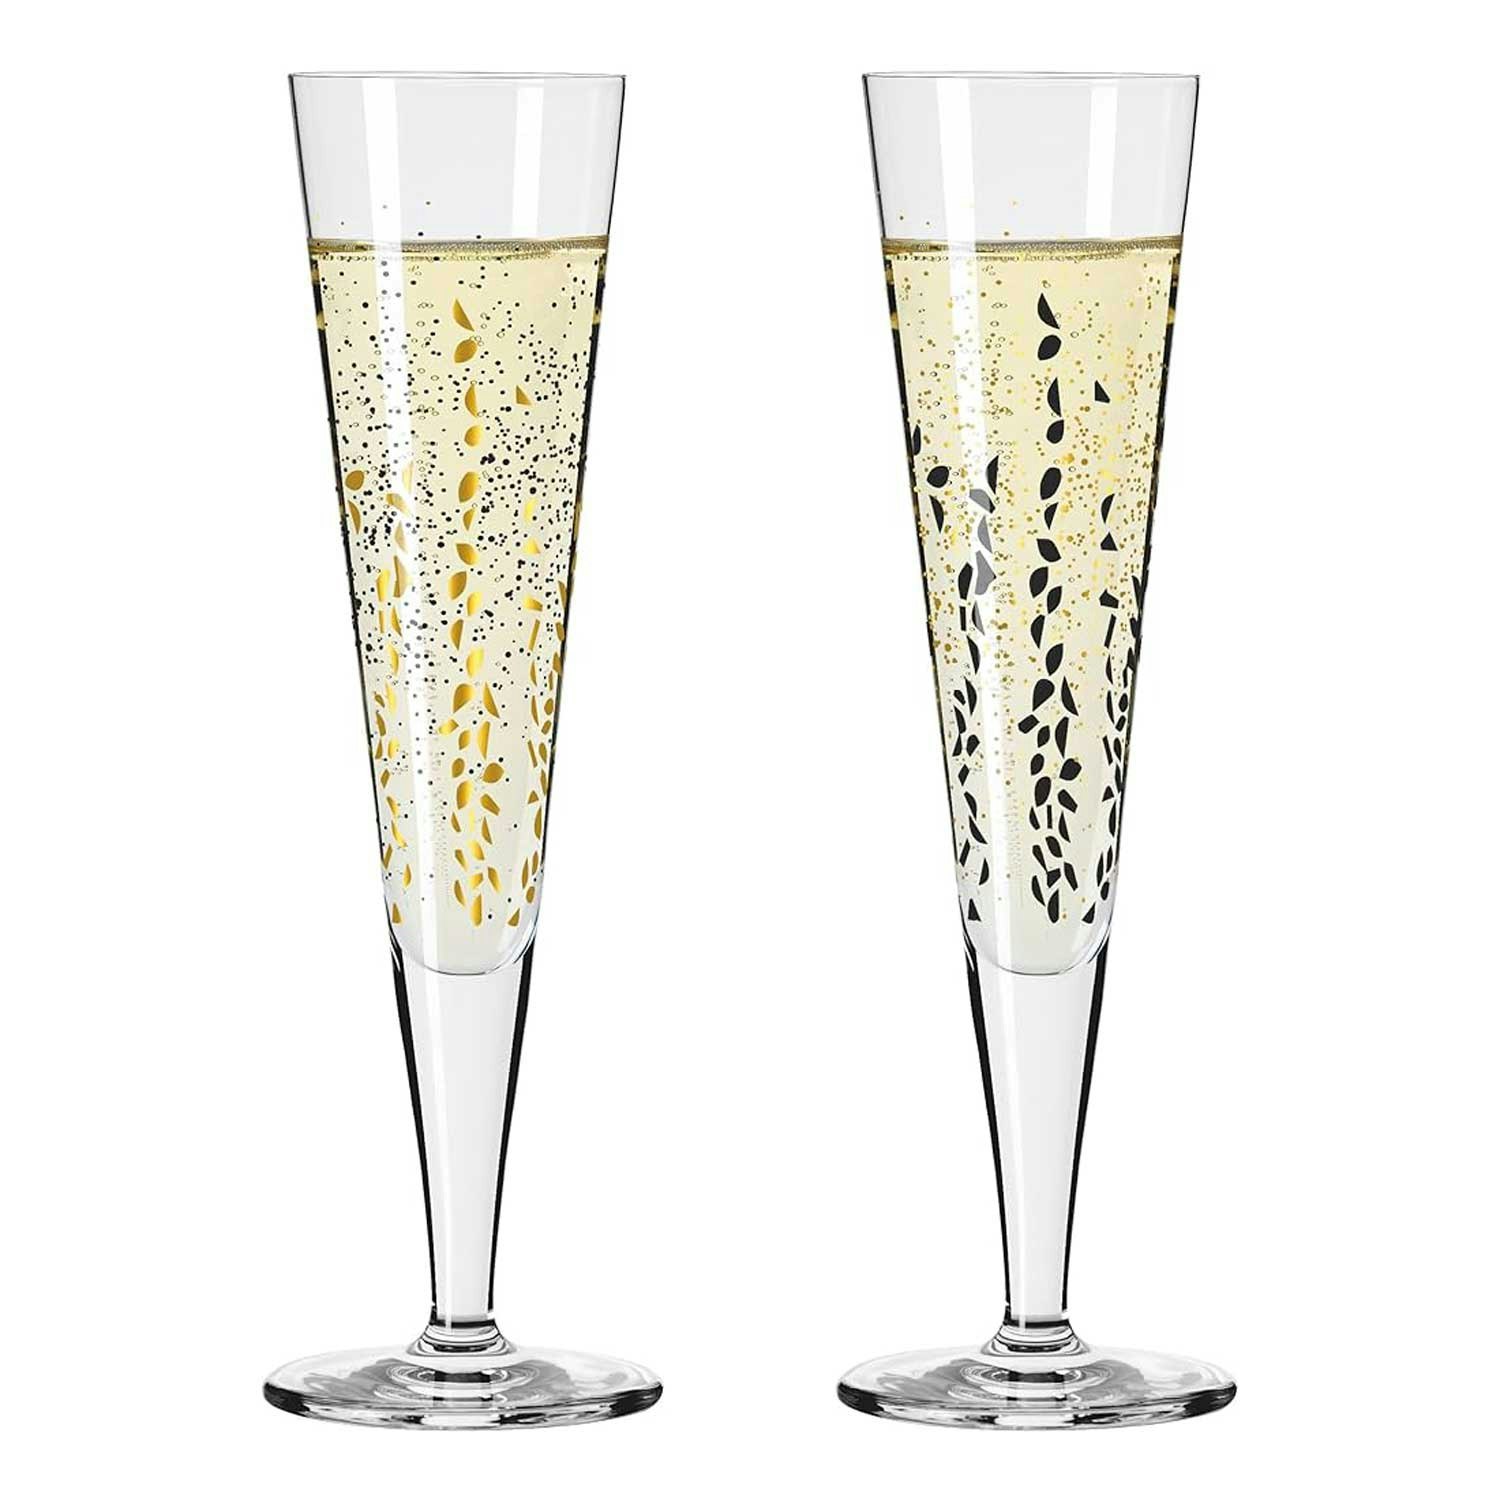 https://royaldesign.com/image/2/ritzenhoff-goldnacht-champagne-glasses-2-pack-h22-0